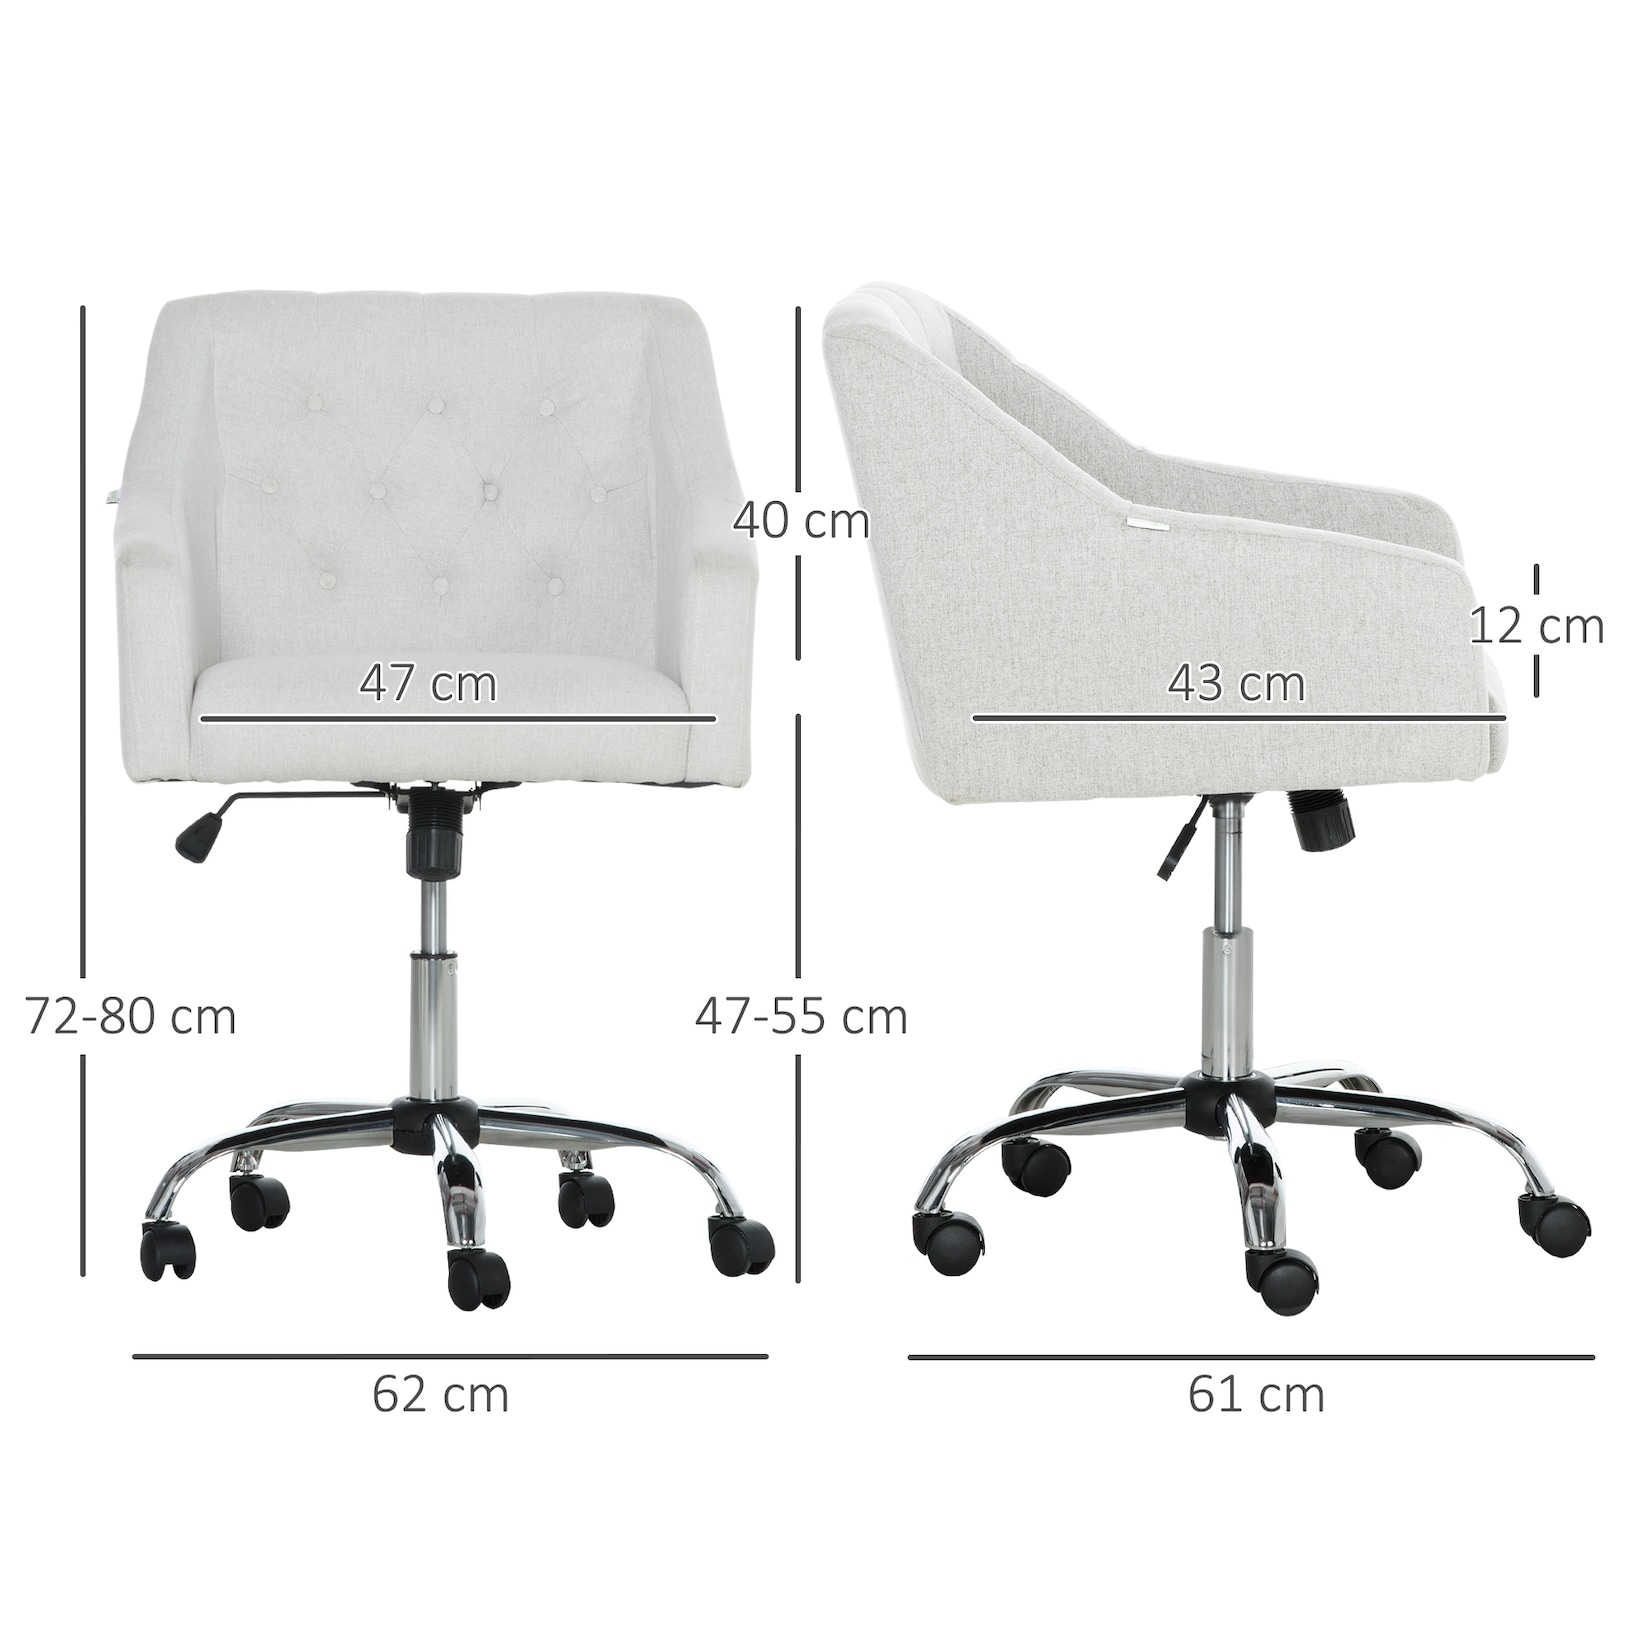 Vinsetto Bürostuhl mit Armlehne 62L x 61B x 72-80H cm   schreibtischstuhl  drehstuhl  bürostuhl  bürohocker  höhenverstellbar